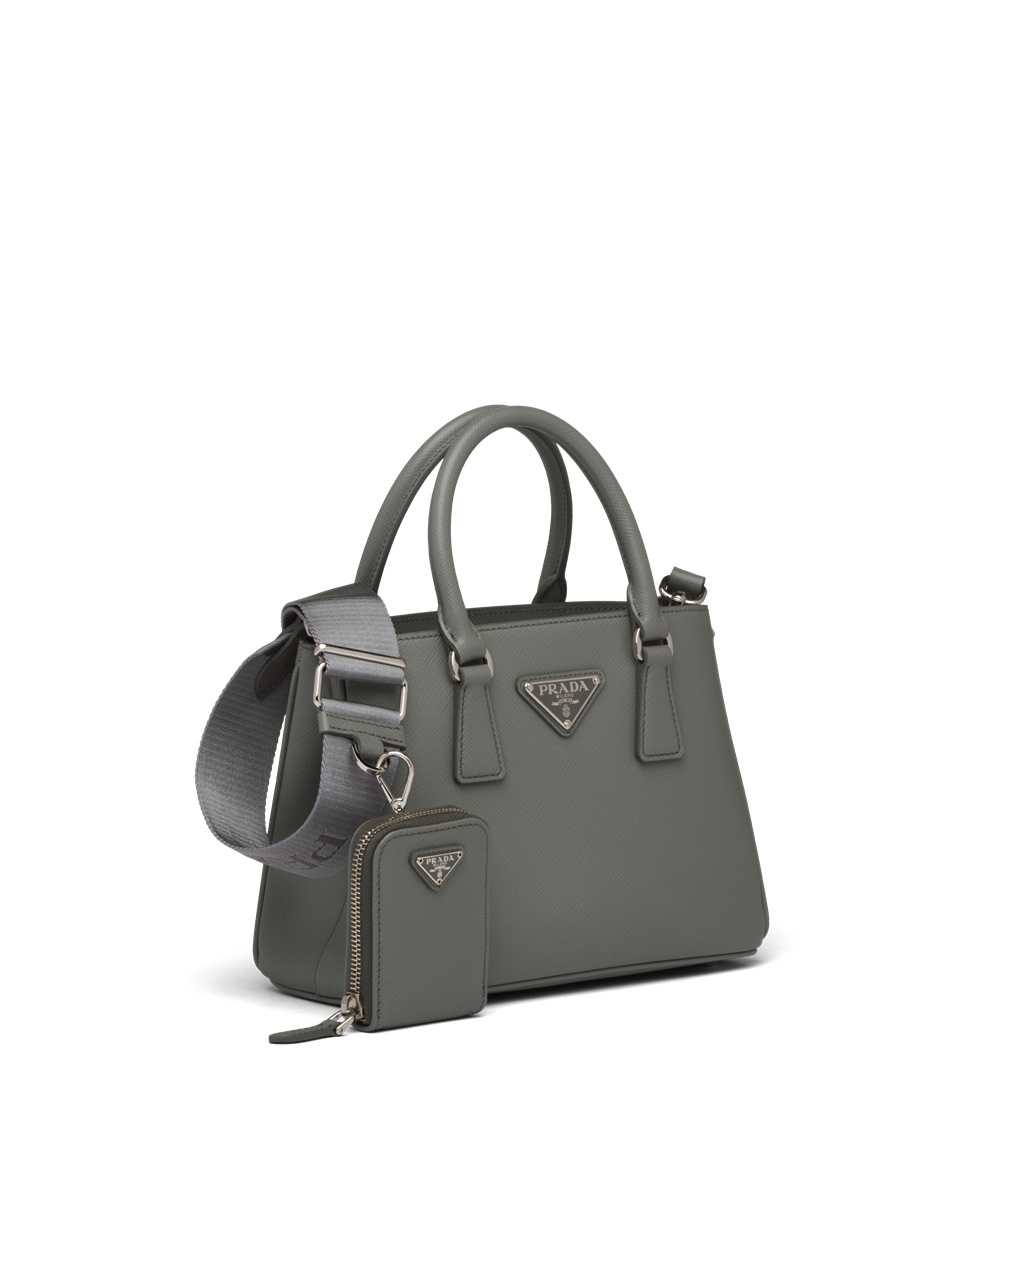 Prada Large Galleria Saffiano Leather Bag - Slate Gray